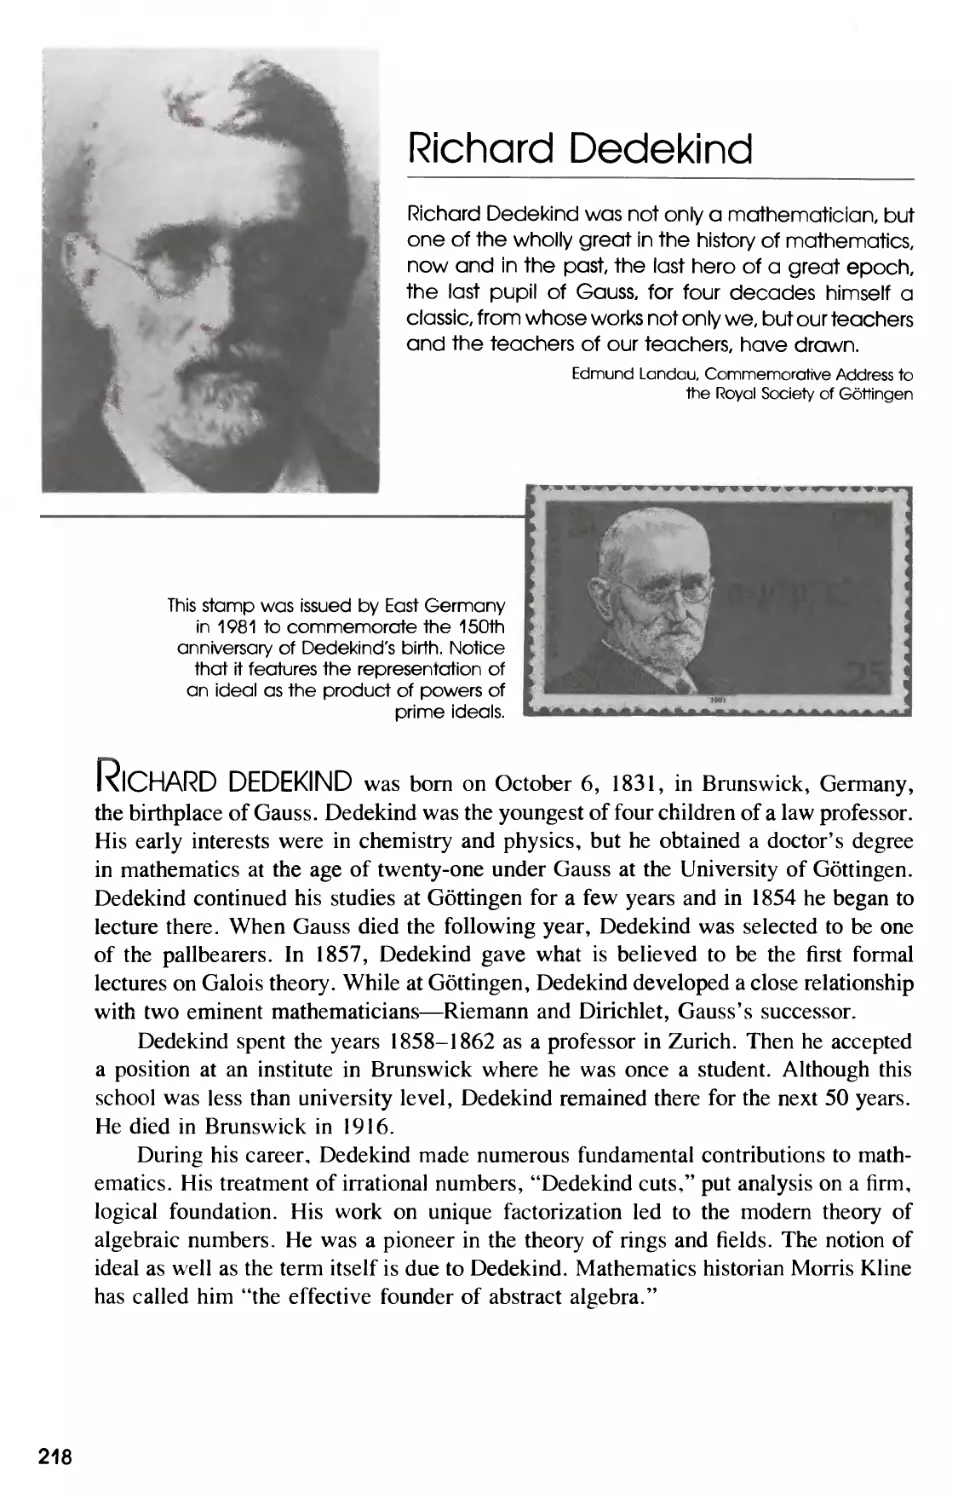 Biography of Richard Dedekind